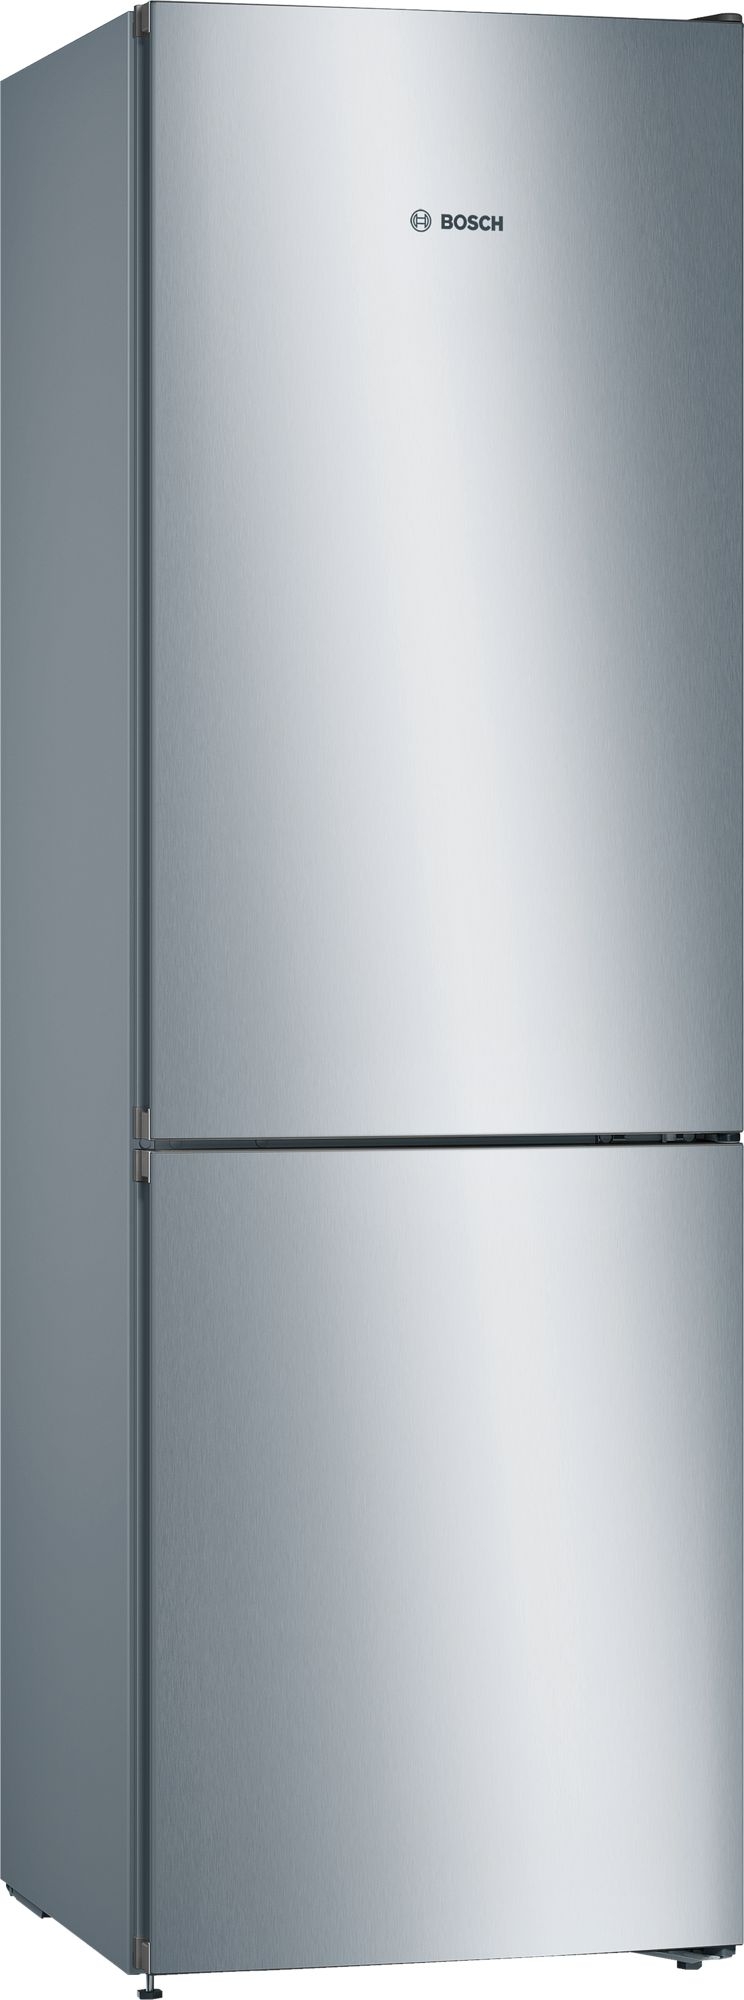 Bosch KGN36VLEAG Freestanding No Frost Fridge Freezer-Inox